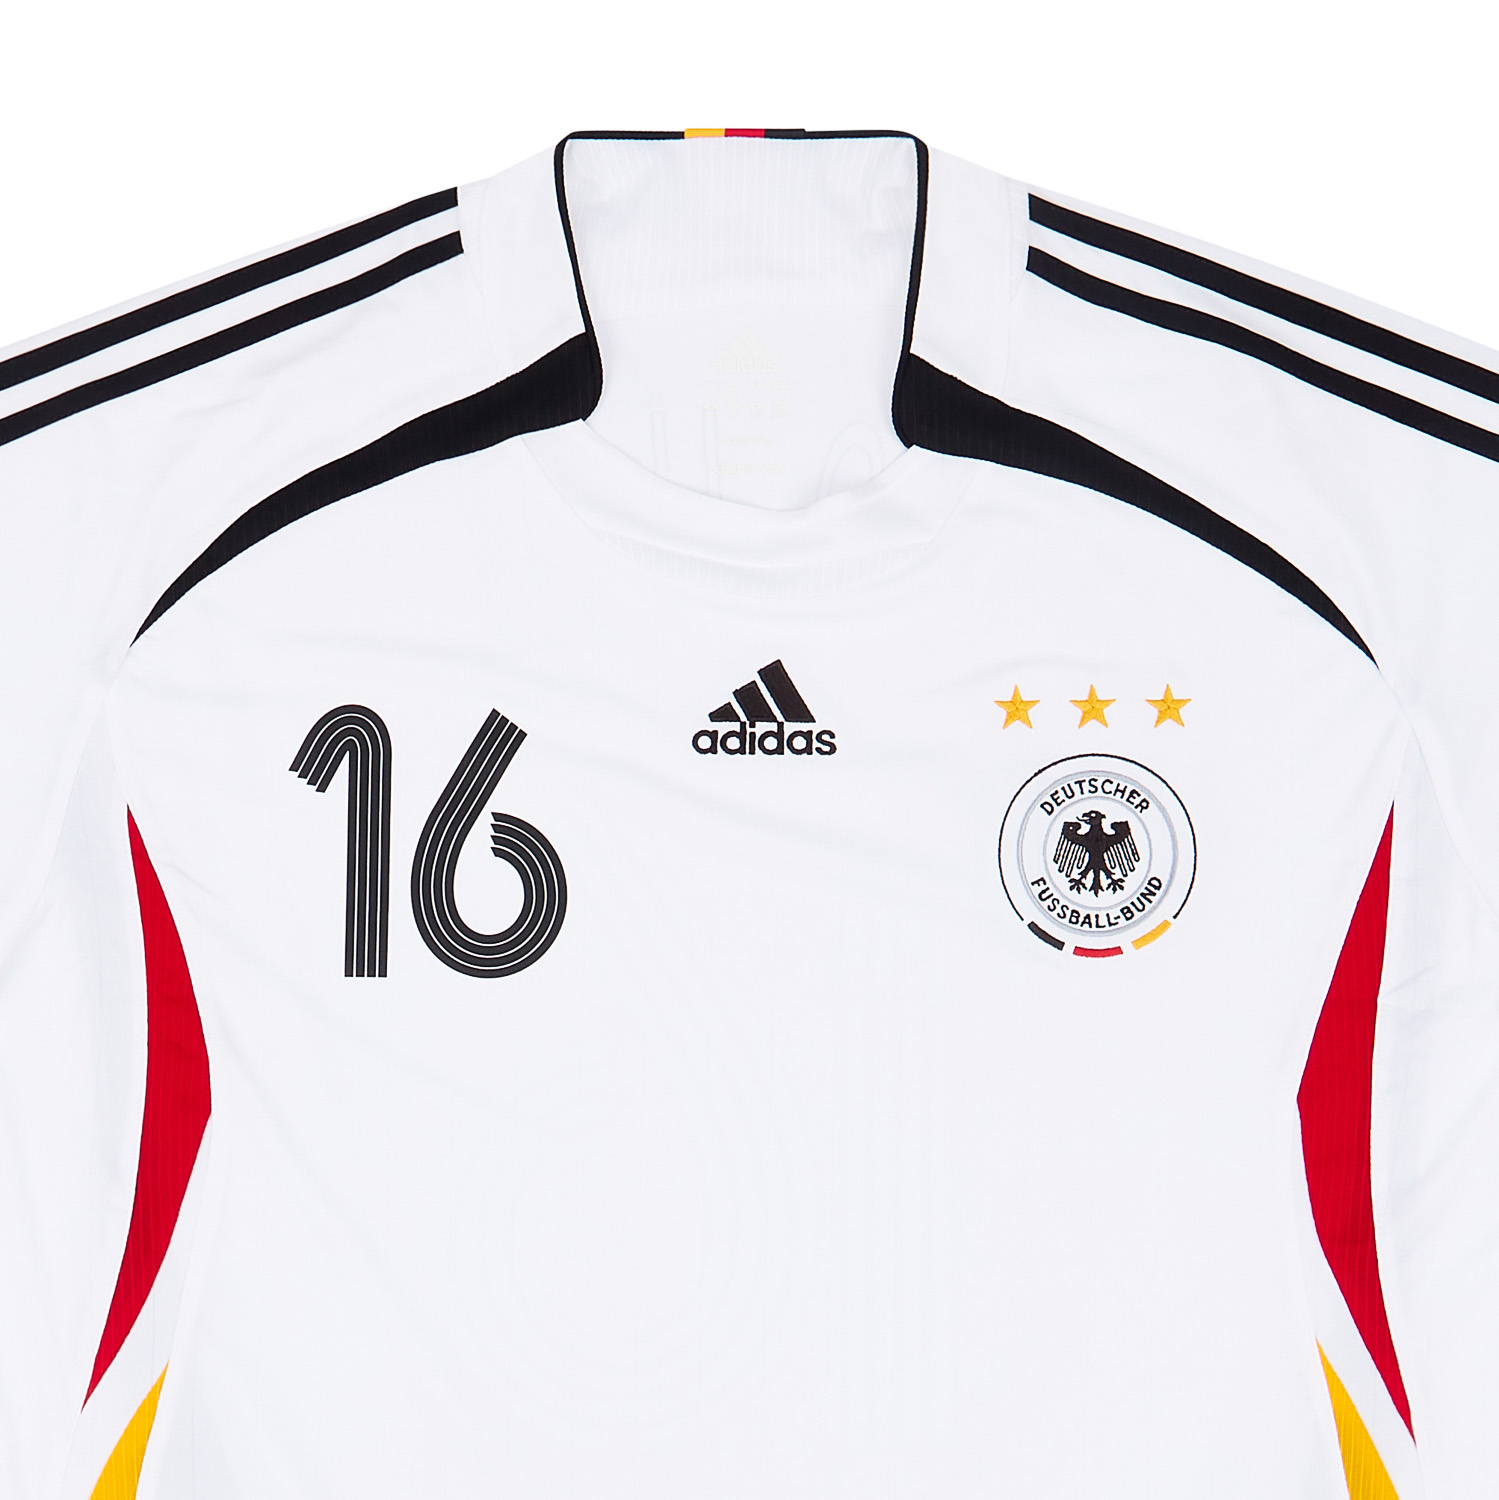 Germany legends' football shirts